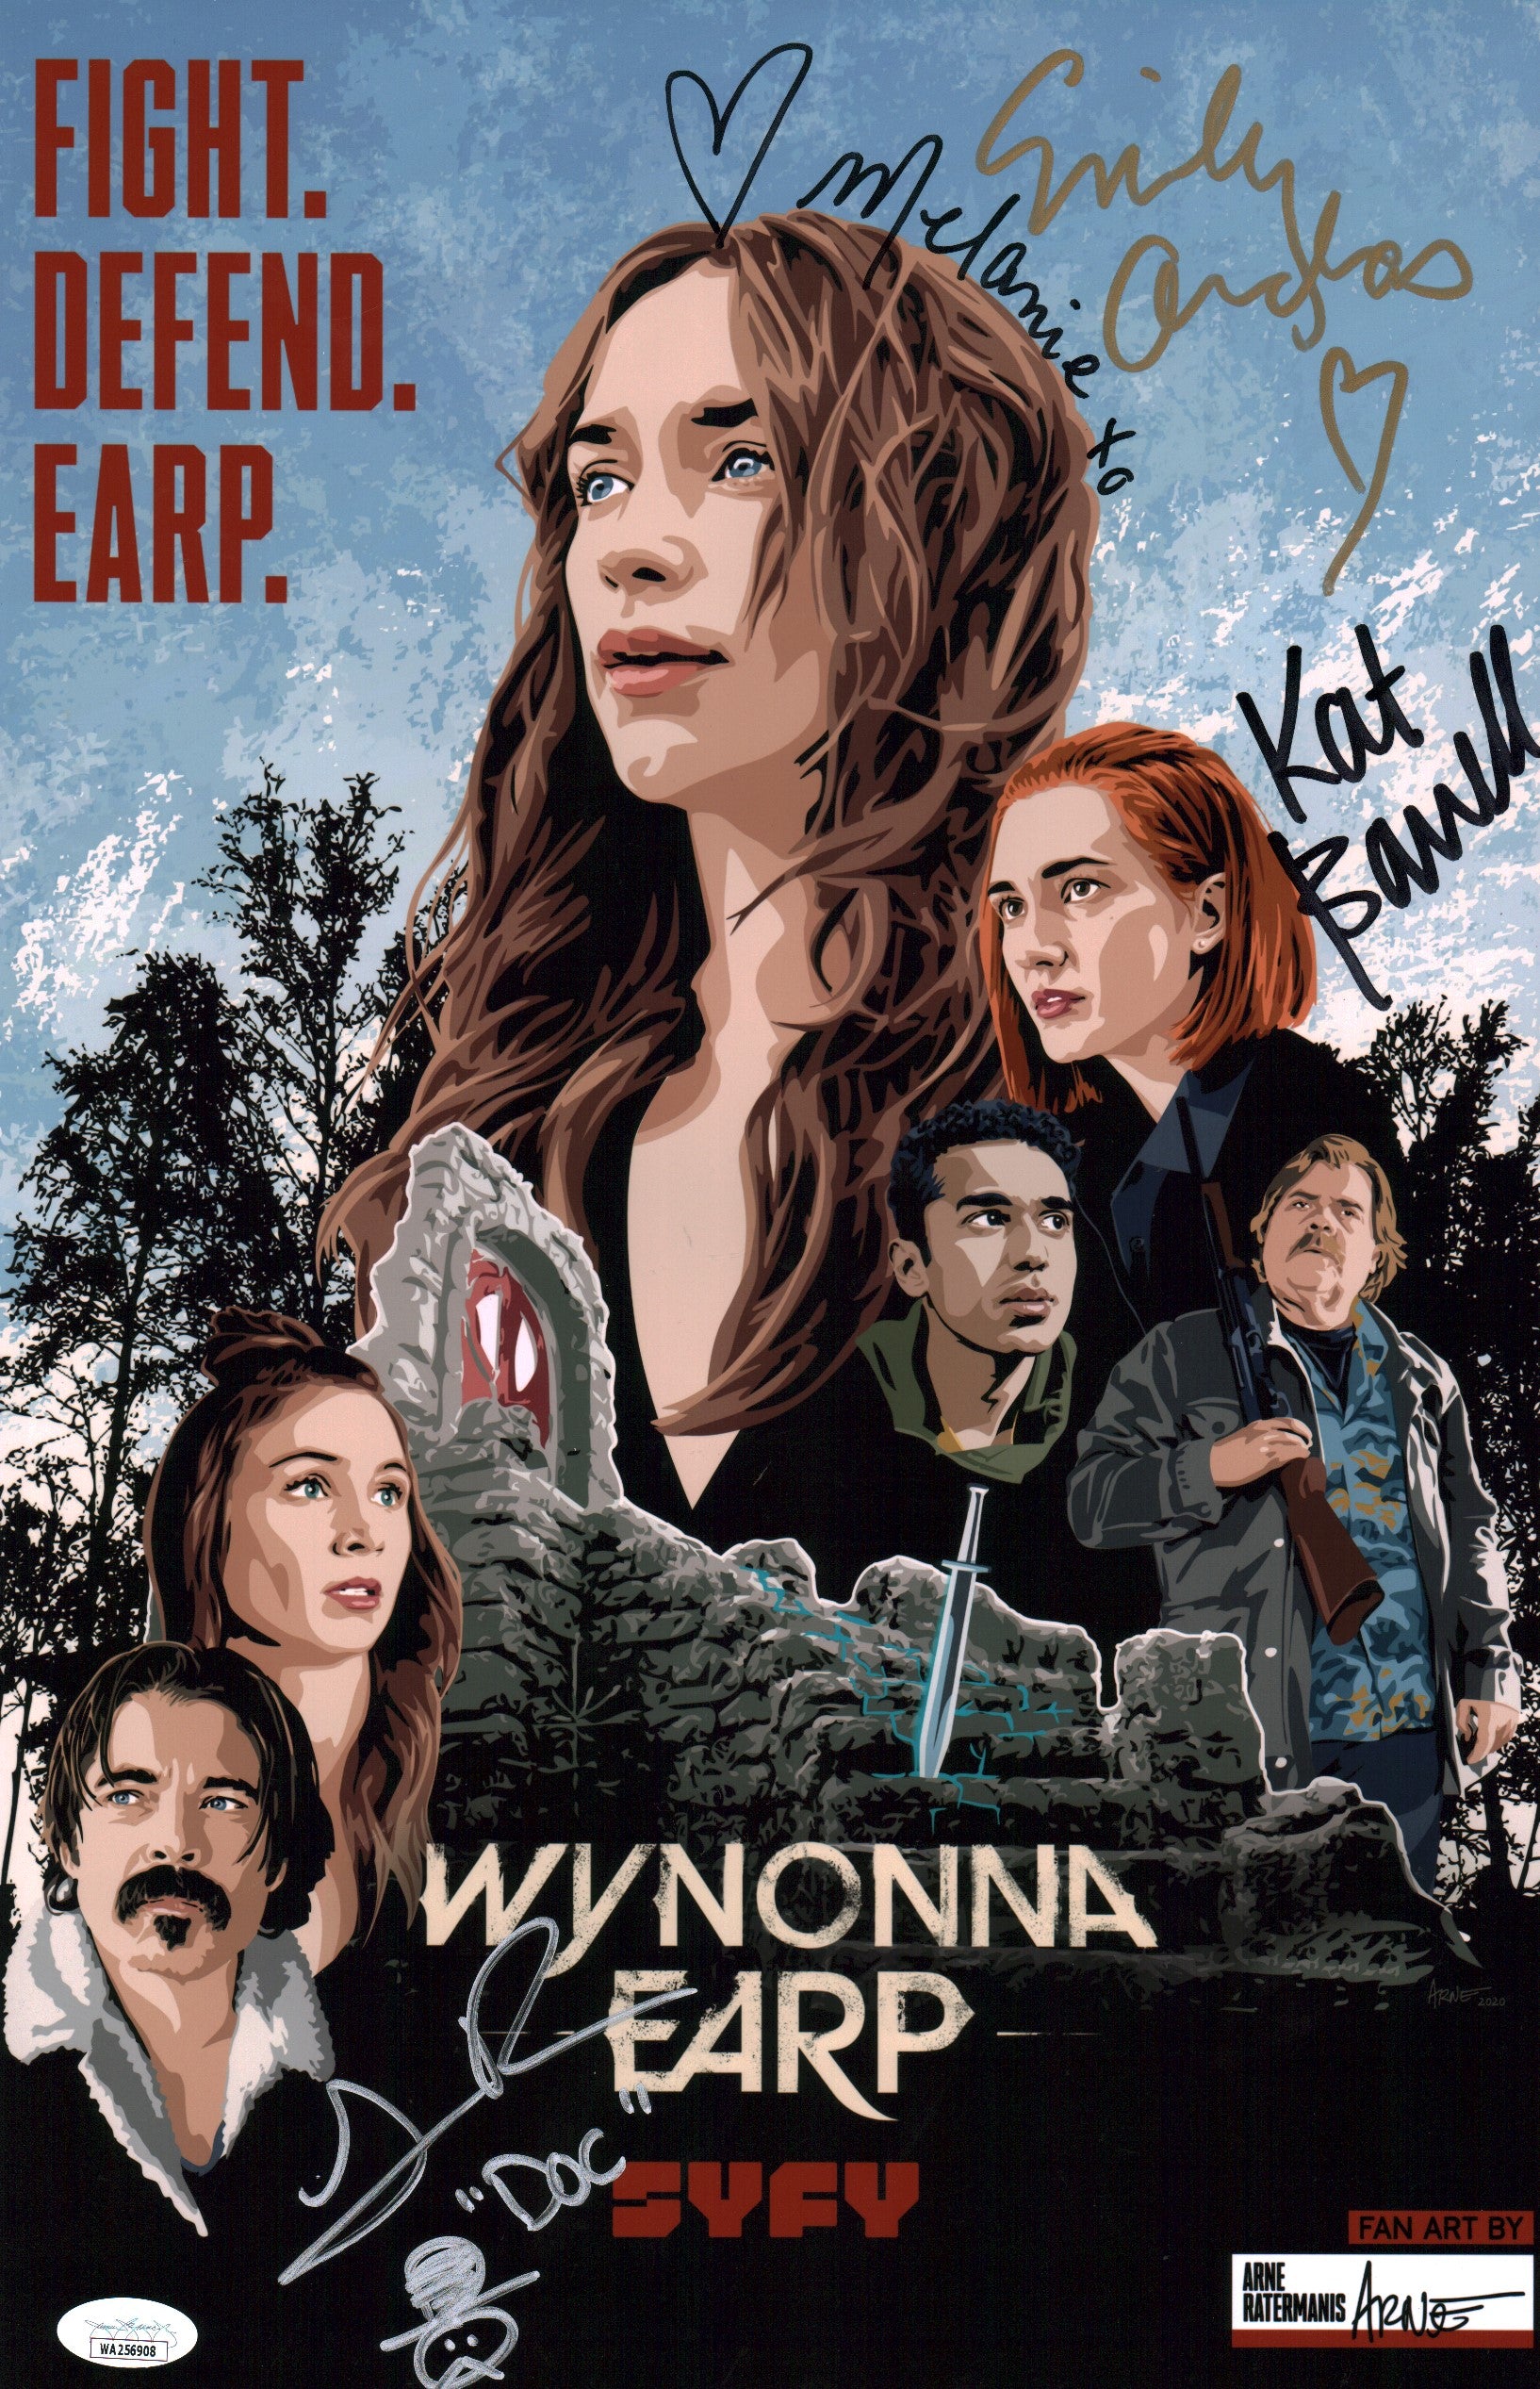 Wynonna Earp 11x17 Cast Photo Poster Signed Andras Barrell JSA Autograph